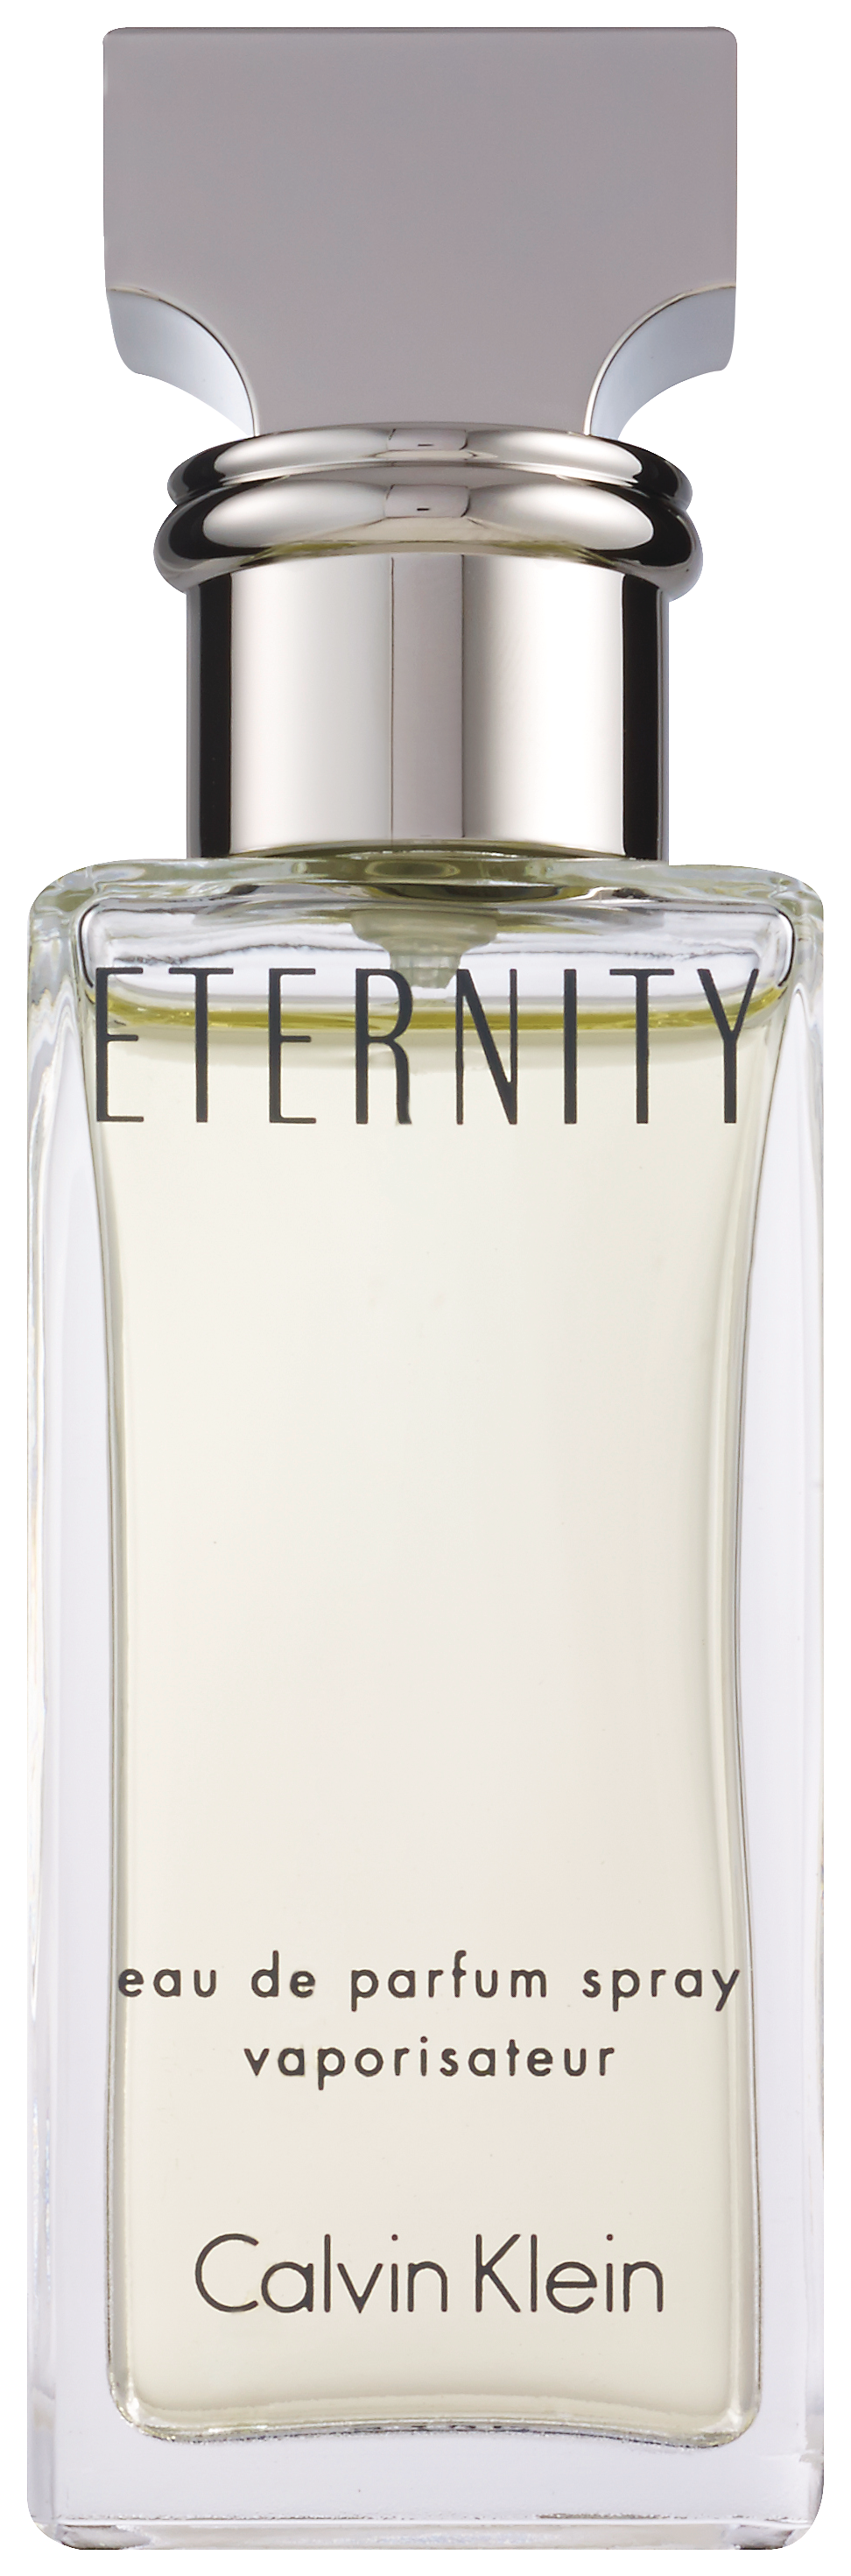 Eternity by Calvin Klein - Eau de Parfum en spray, 1 oz